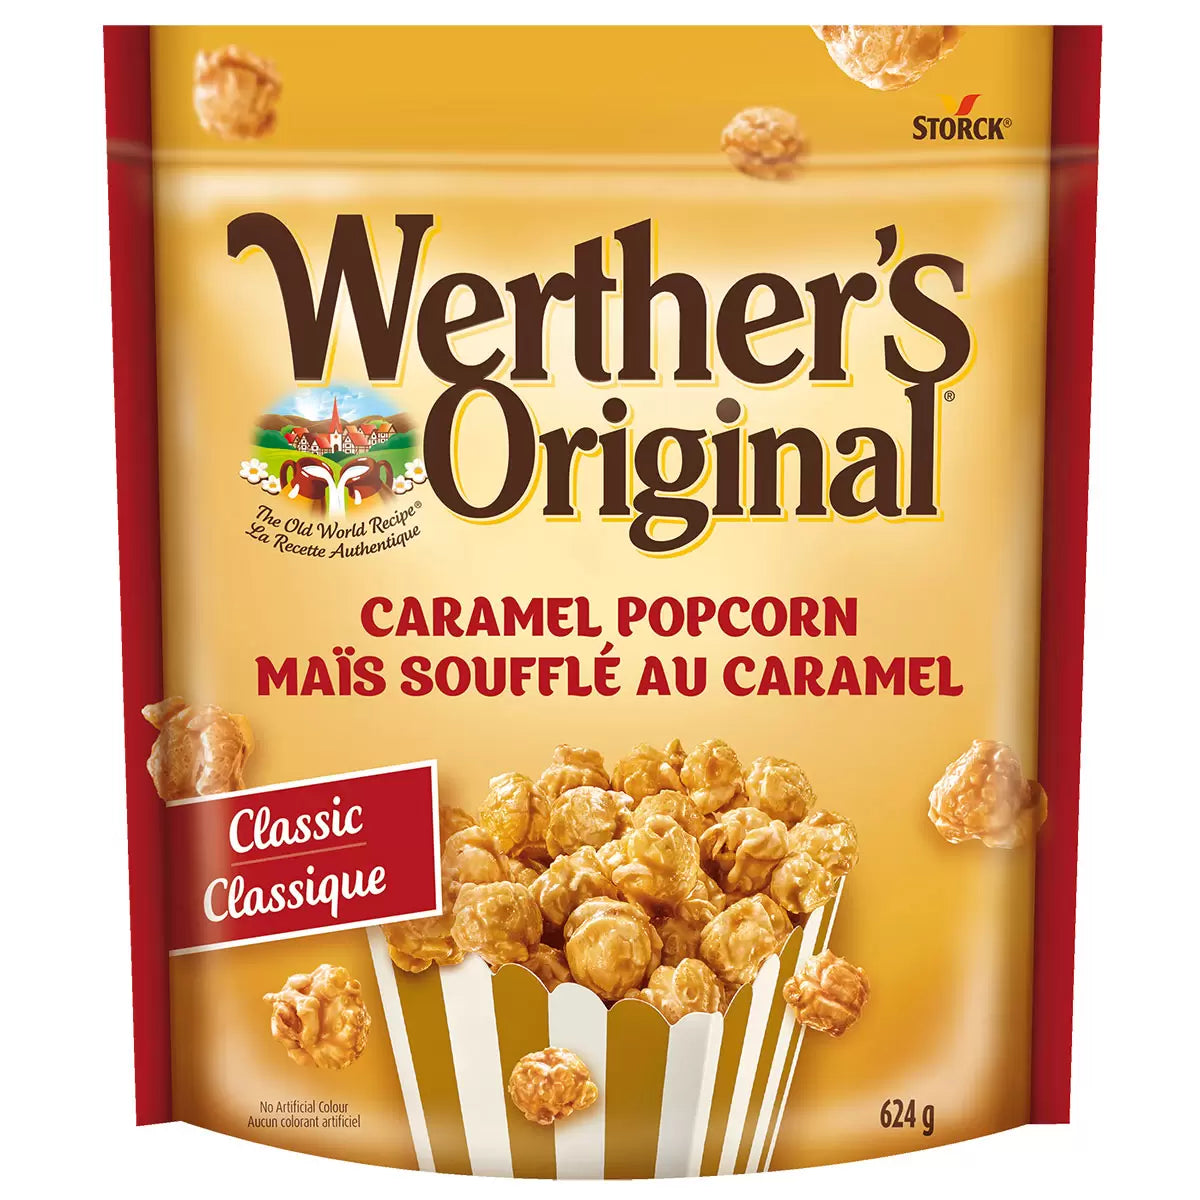 Werther's Original Caramel Popcorn - 624g